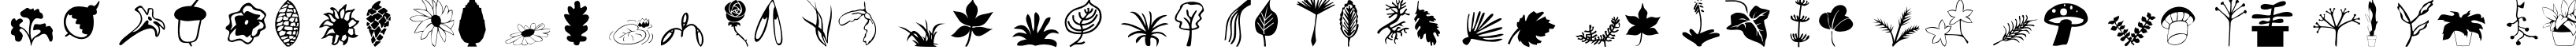 Пример написания английского алфавита шрифтом Plants